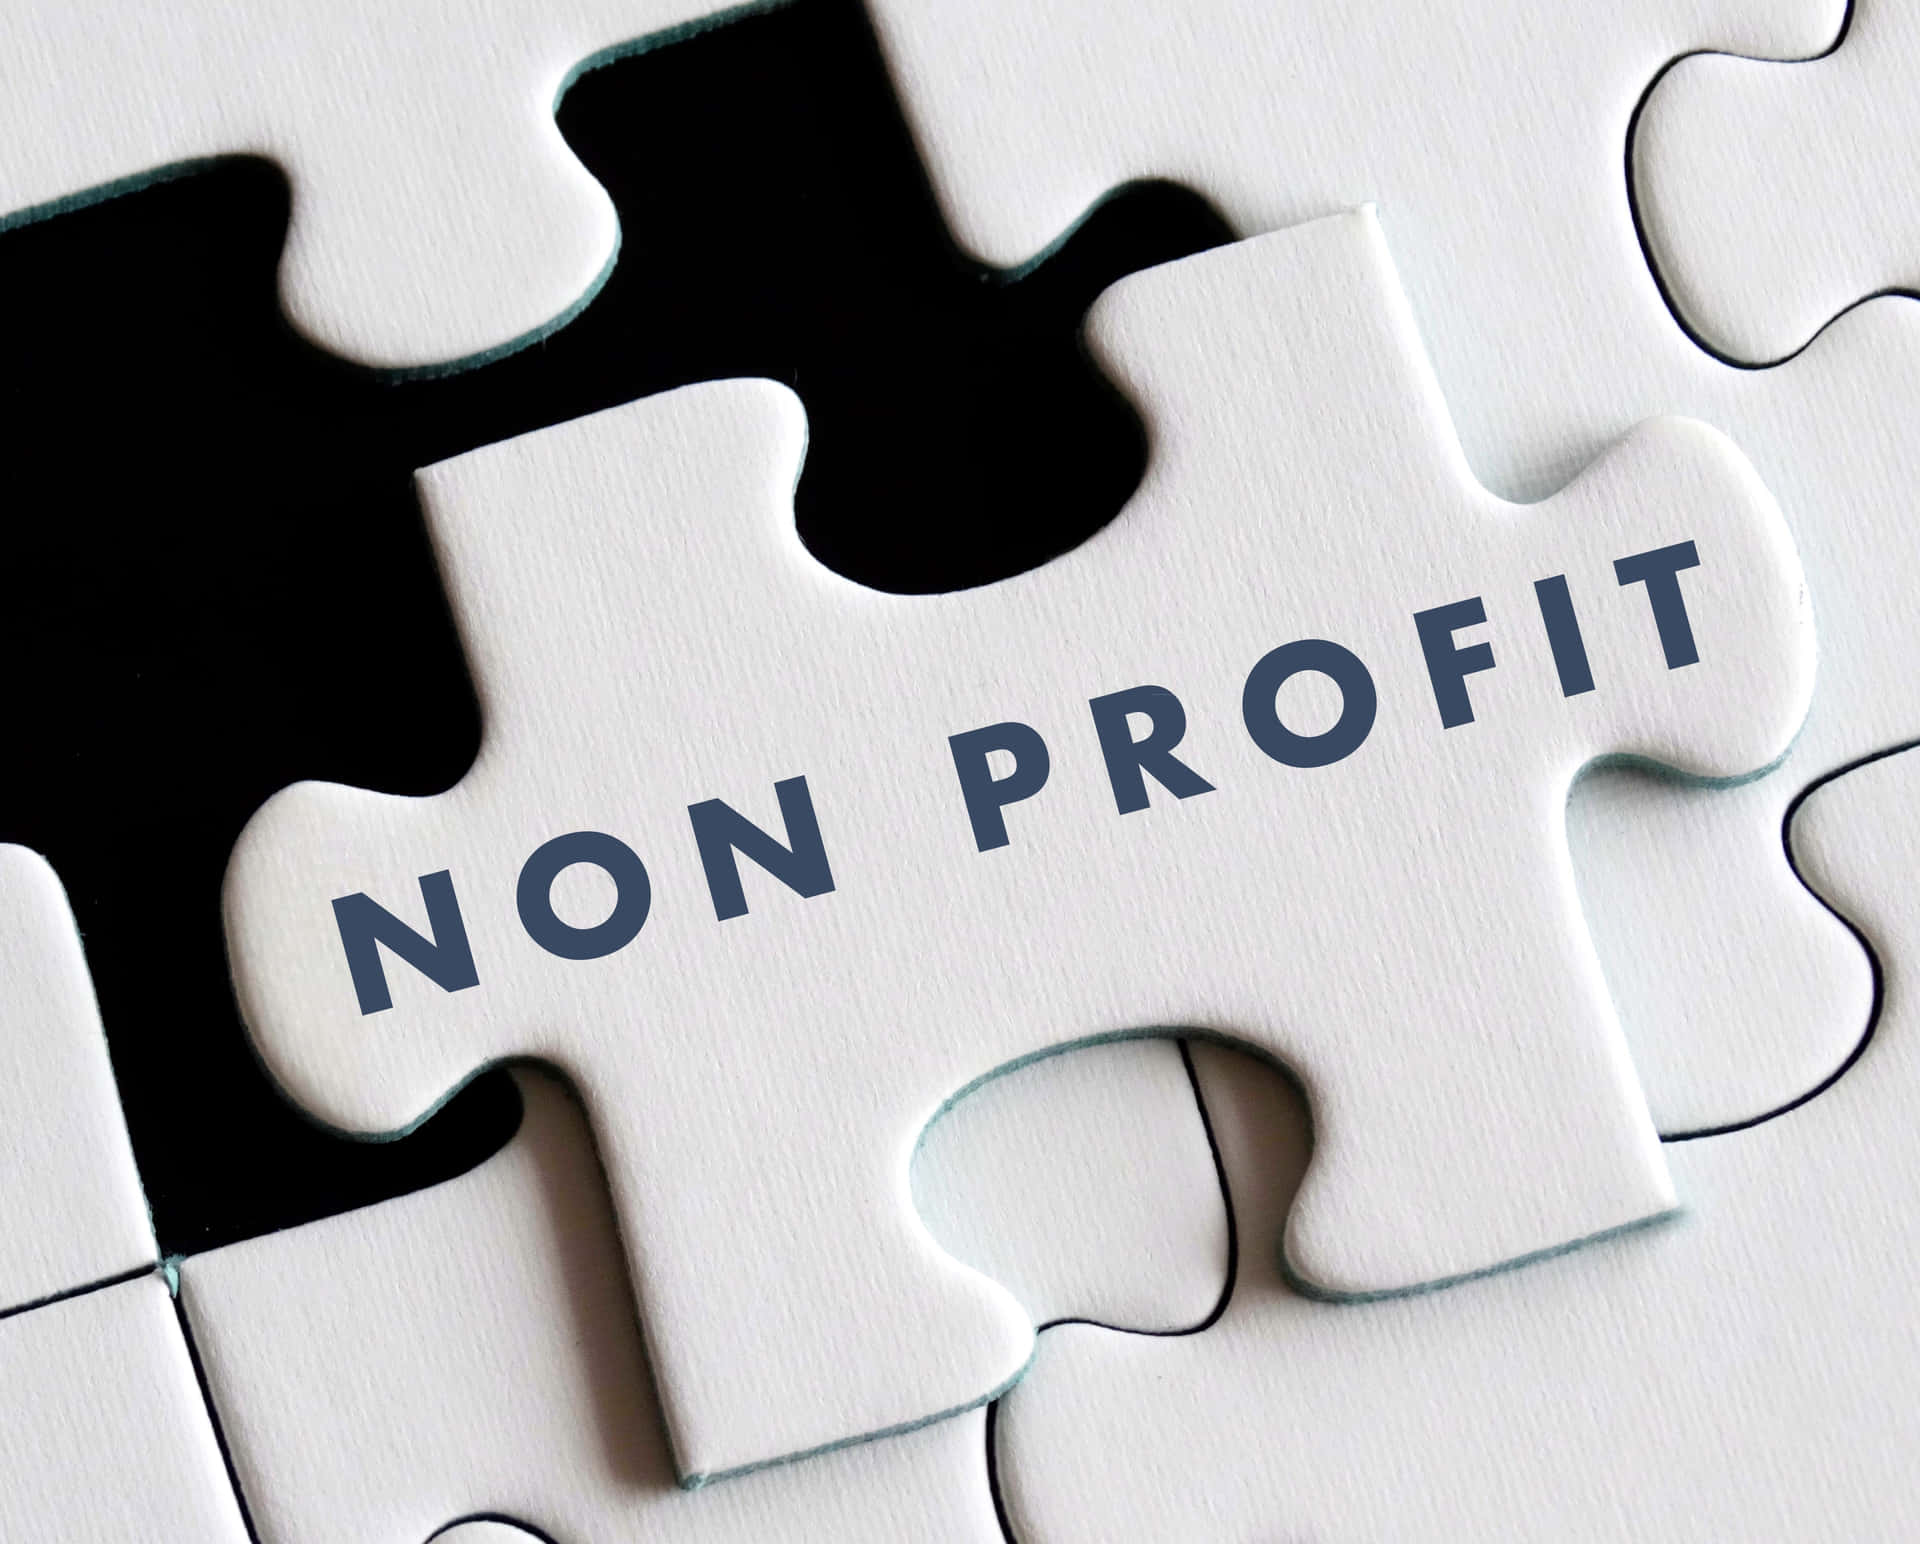 Non Profit - A Puzzle Piece With The Word Non Profit